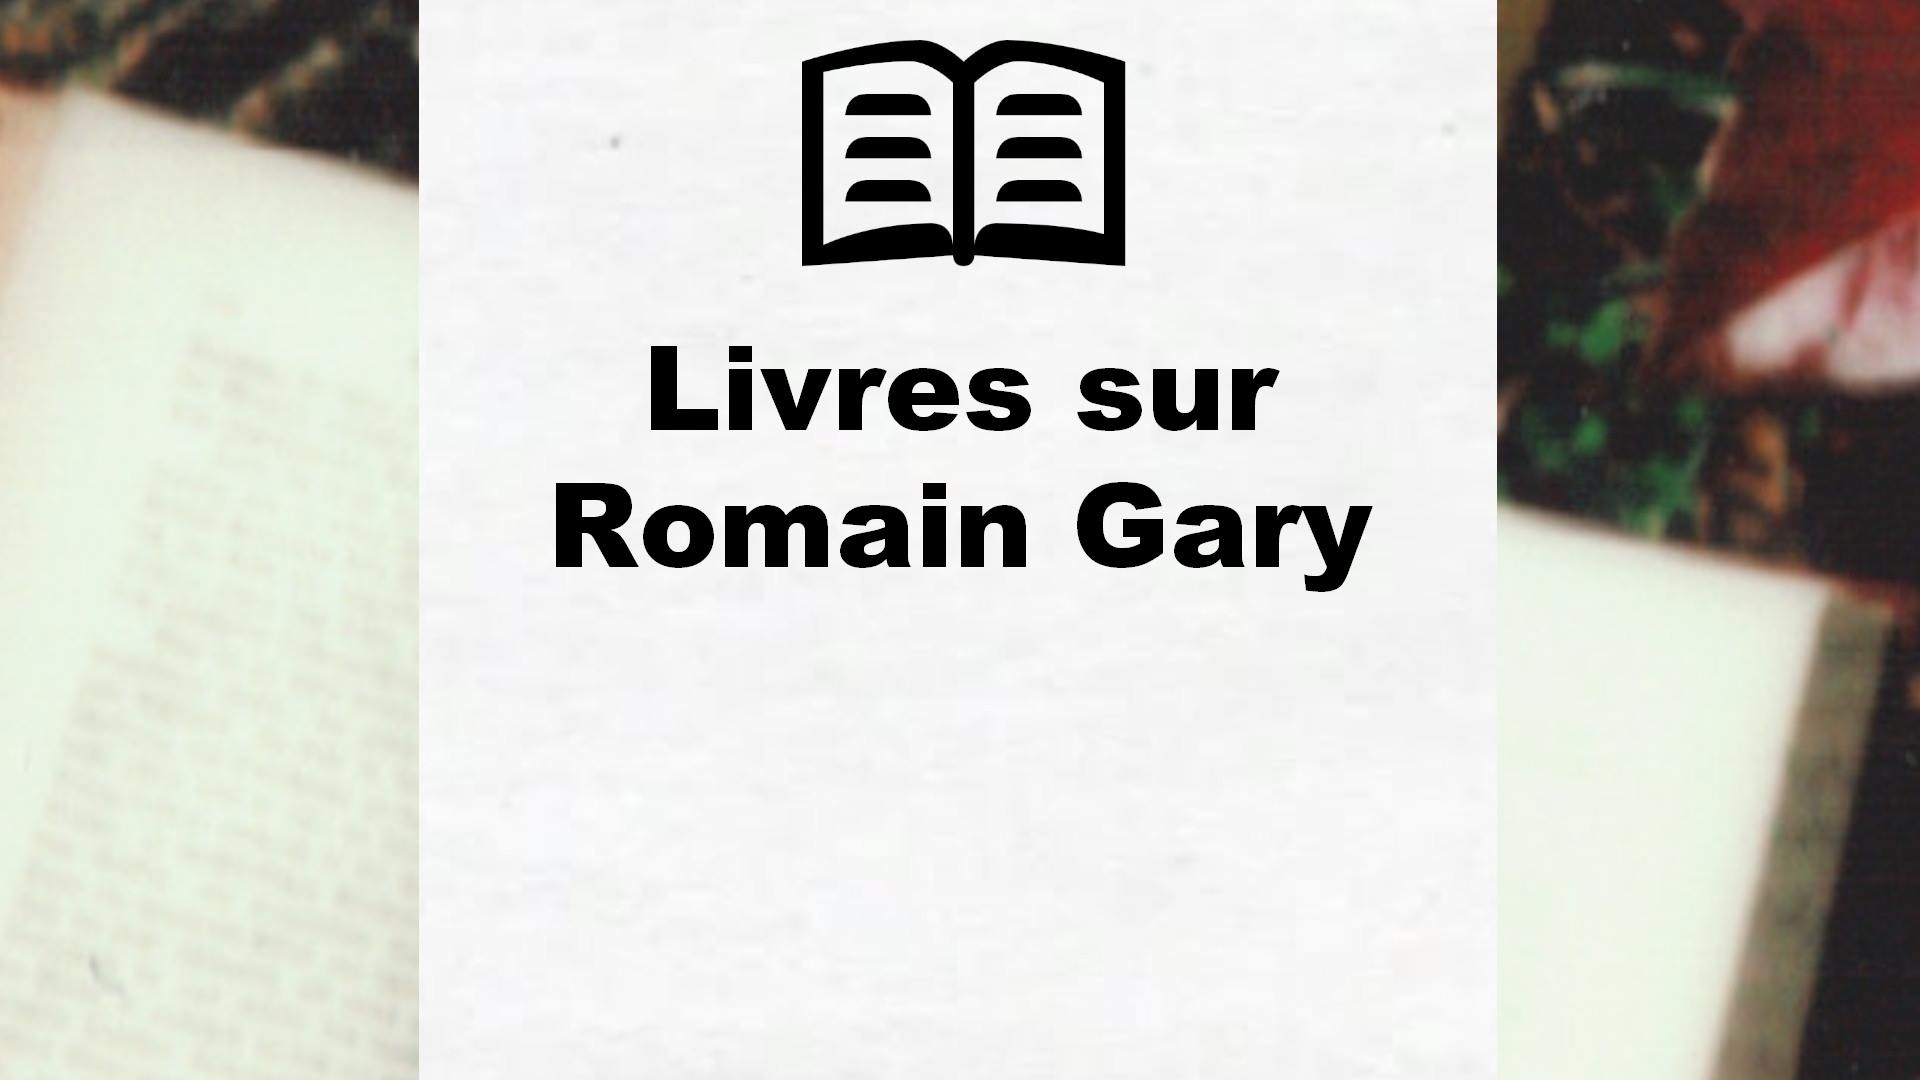 Livres sur Romain Gary